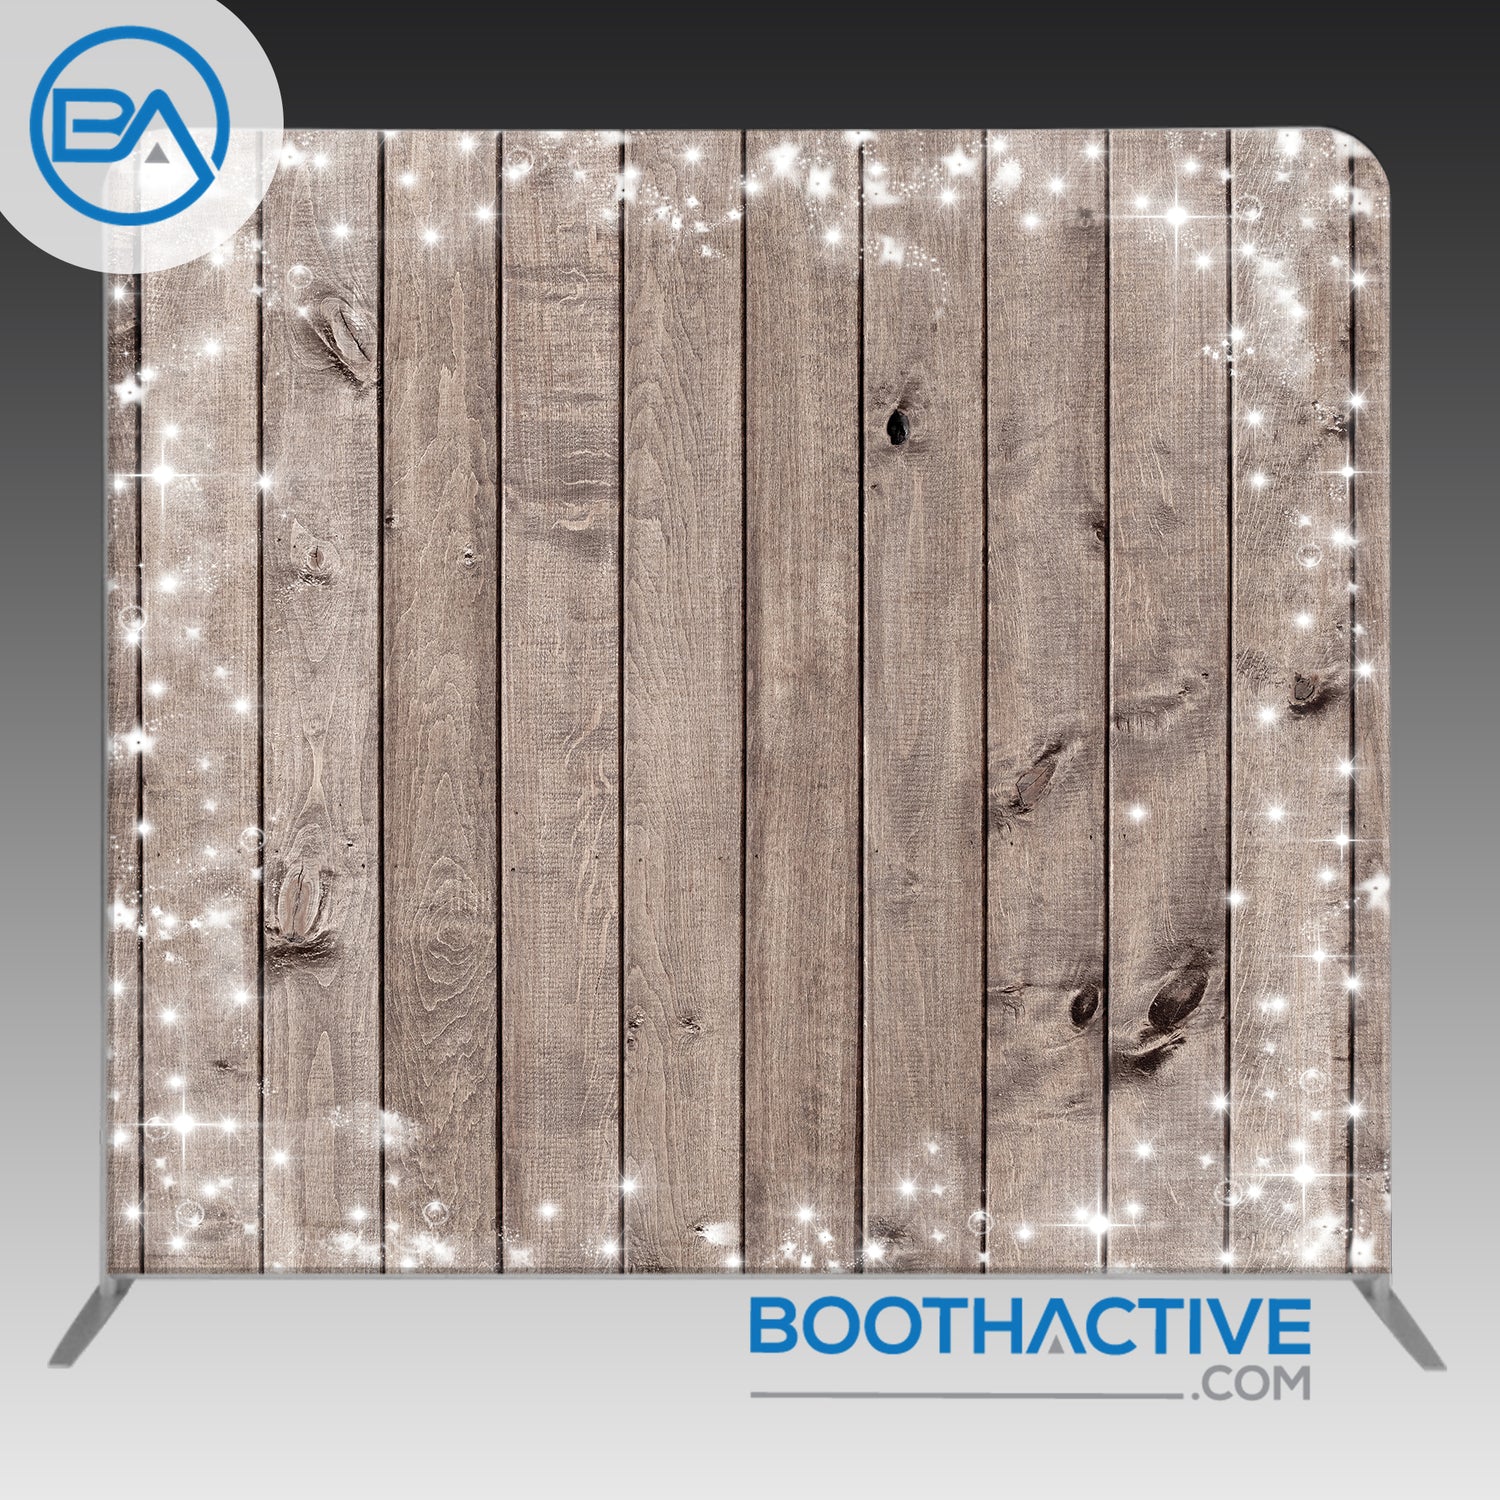 8' x 8' Backdrop - Wood planks w/ lights – BoothActive